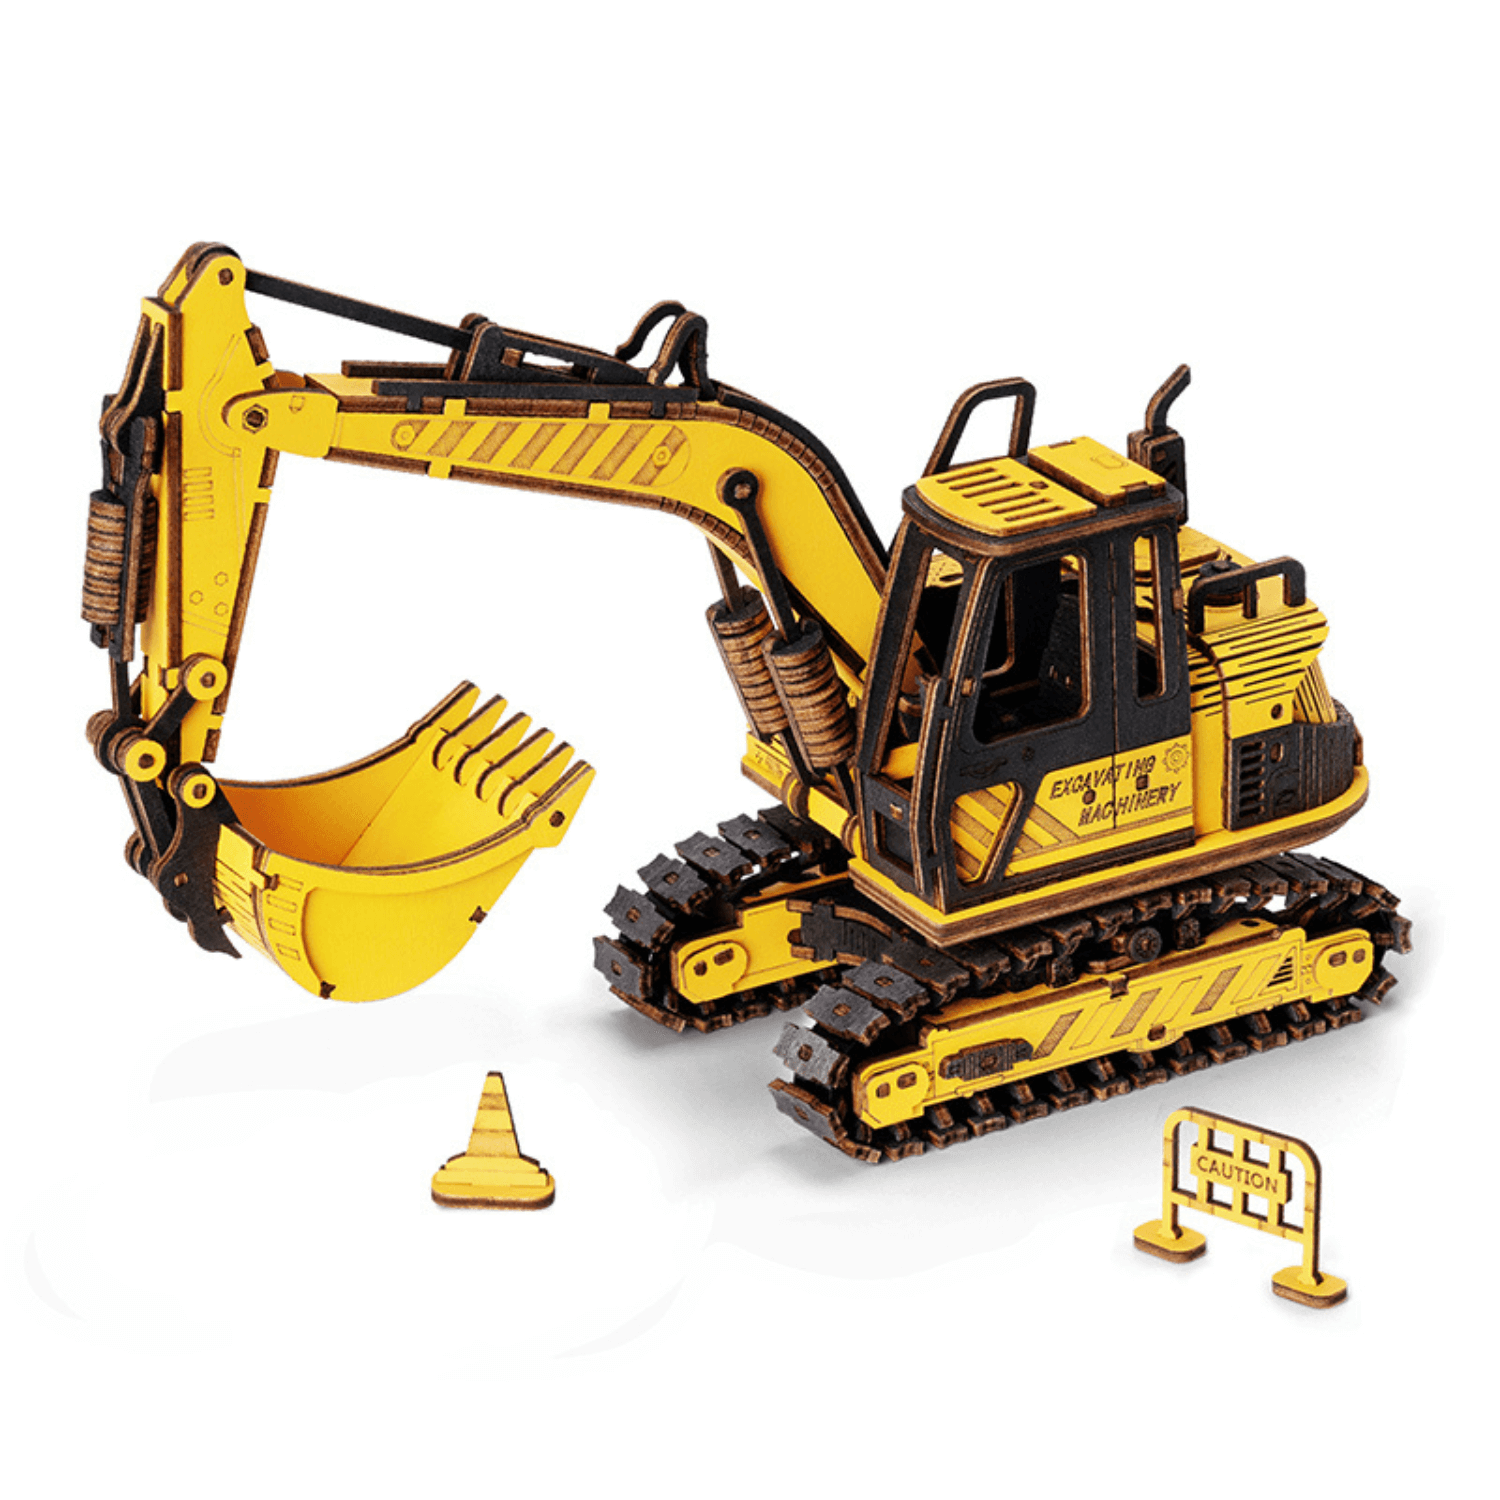 Excavator | Construction machinery